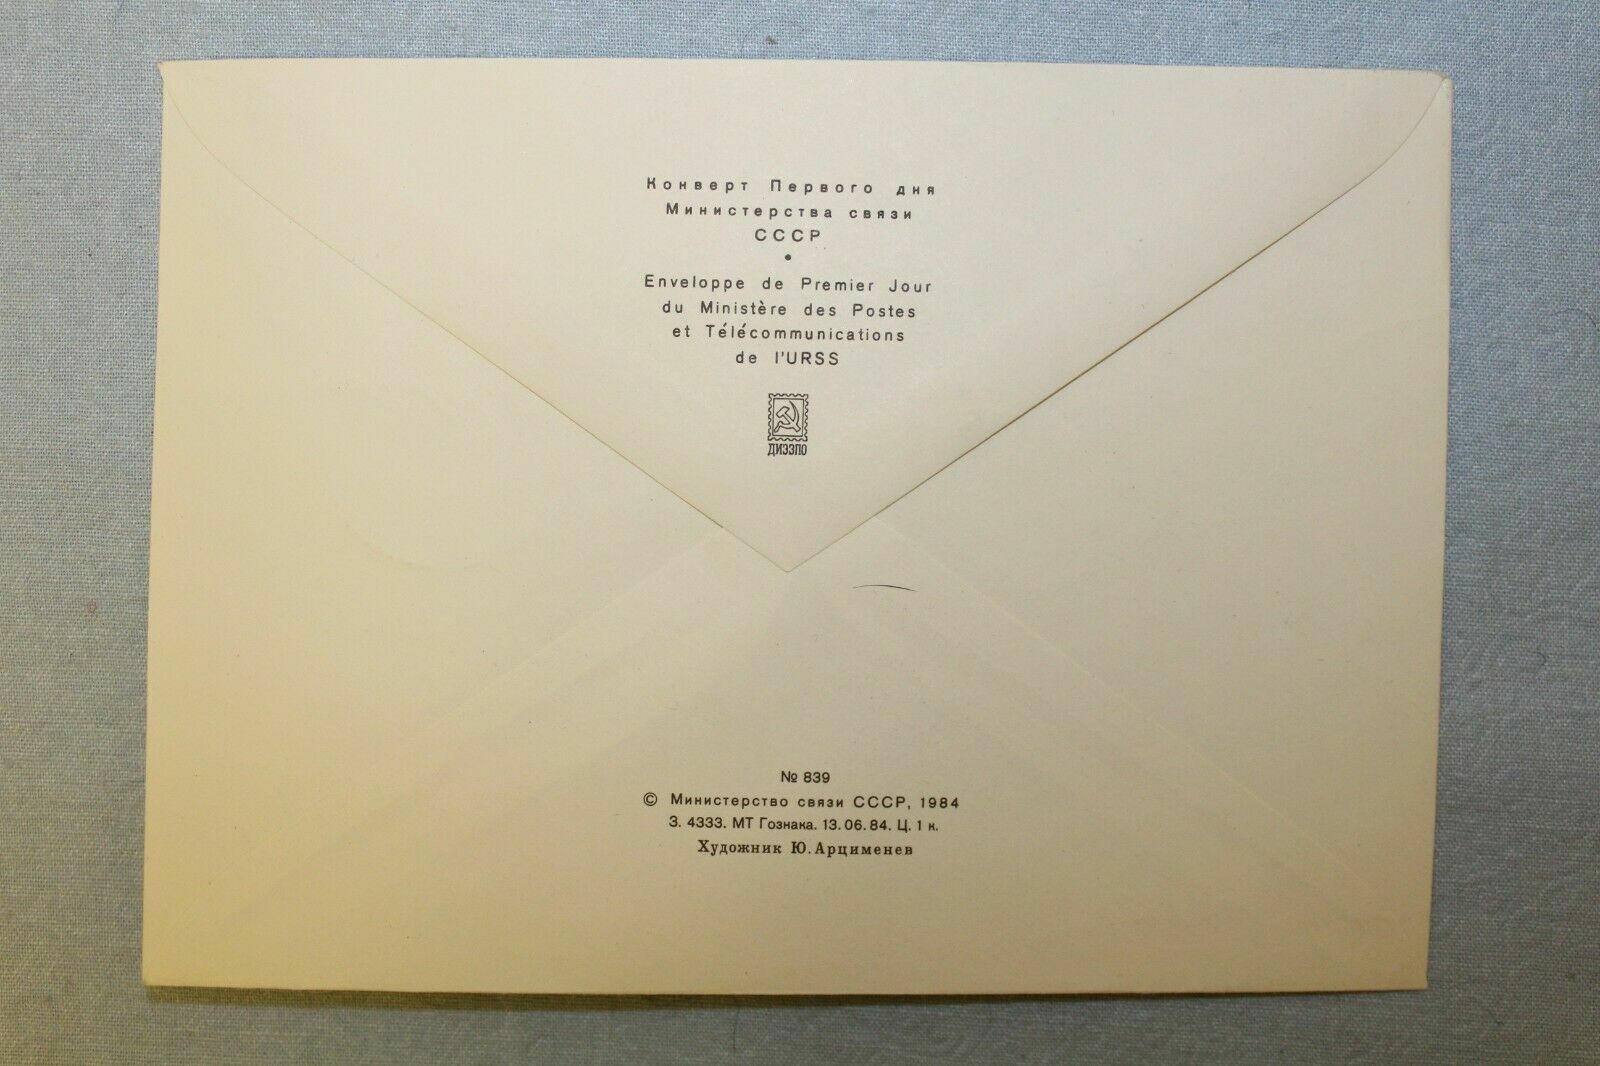 11726.Soviet Chess Envelope. World Chess Championship Match among Men. 1984